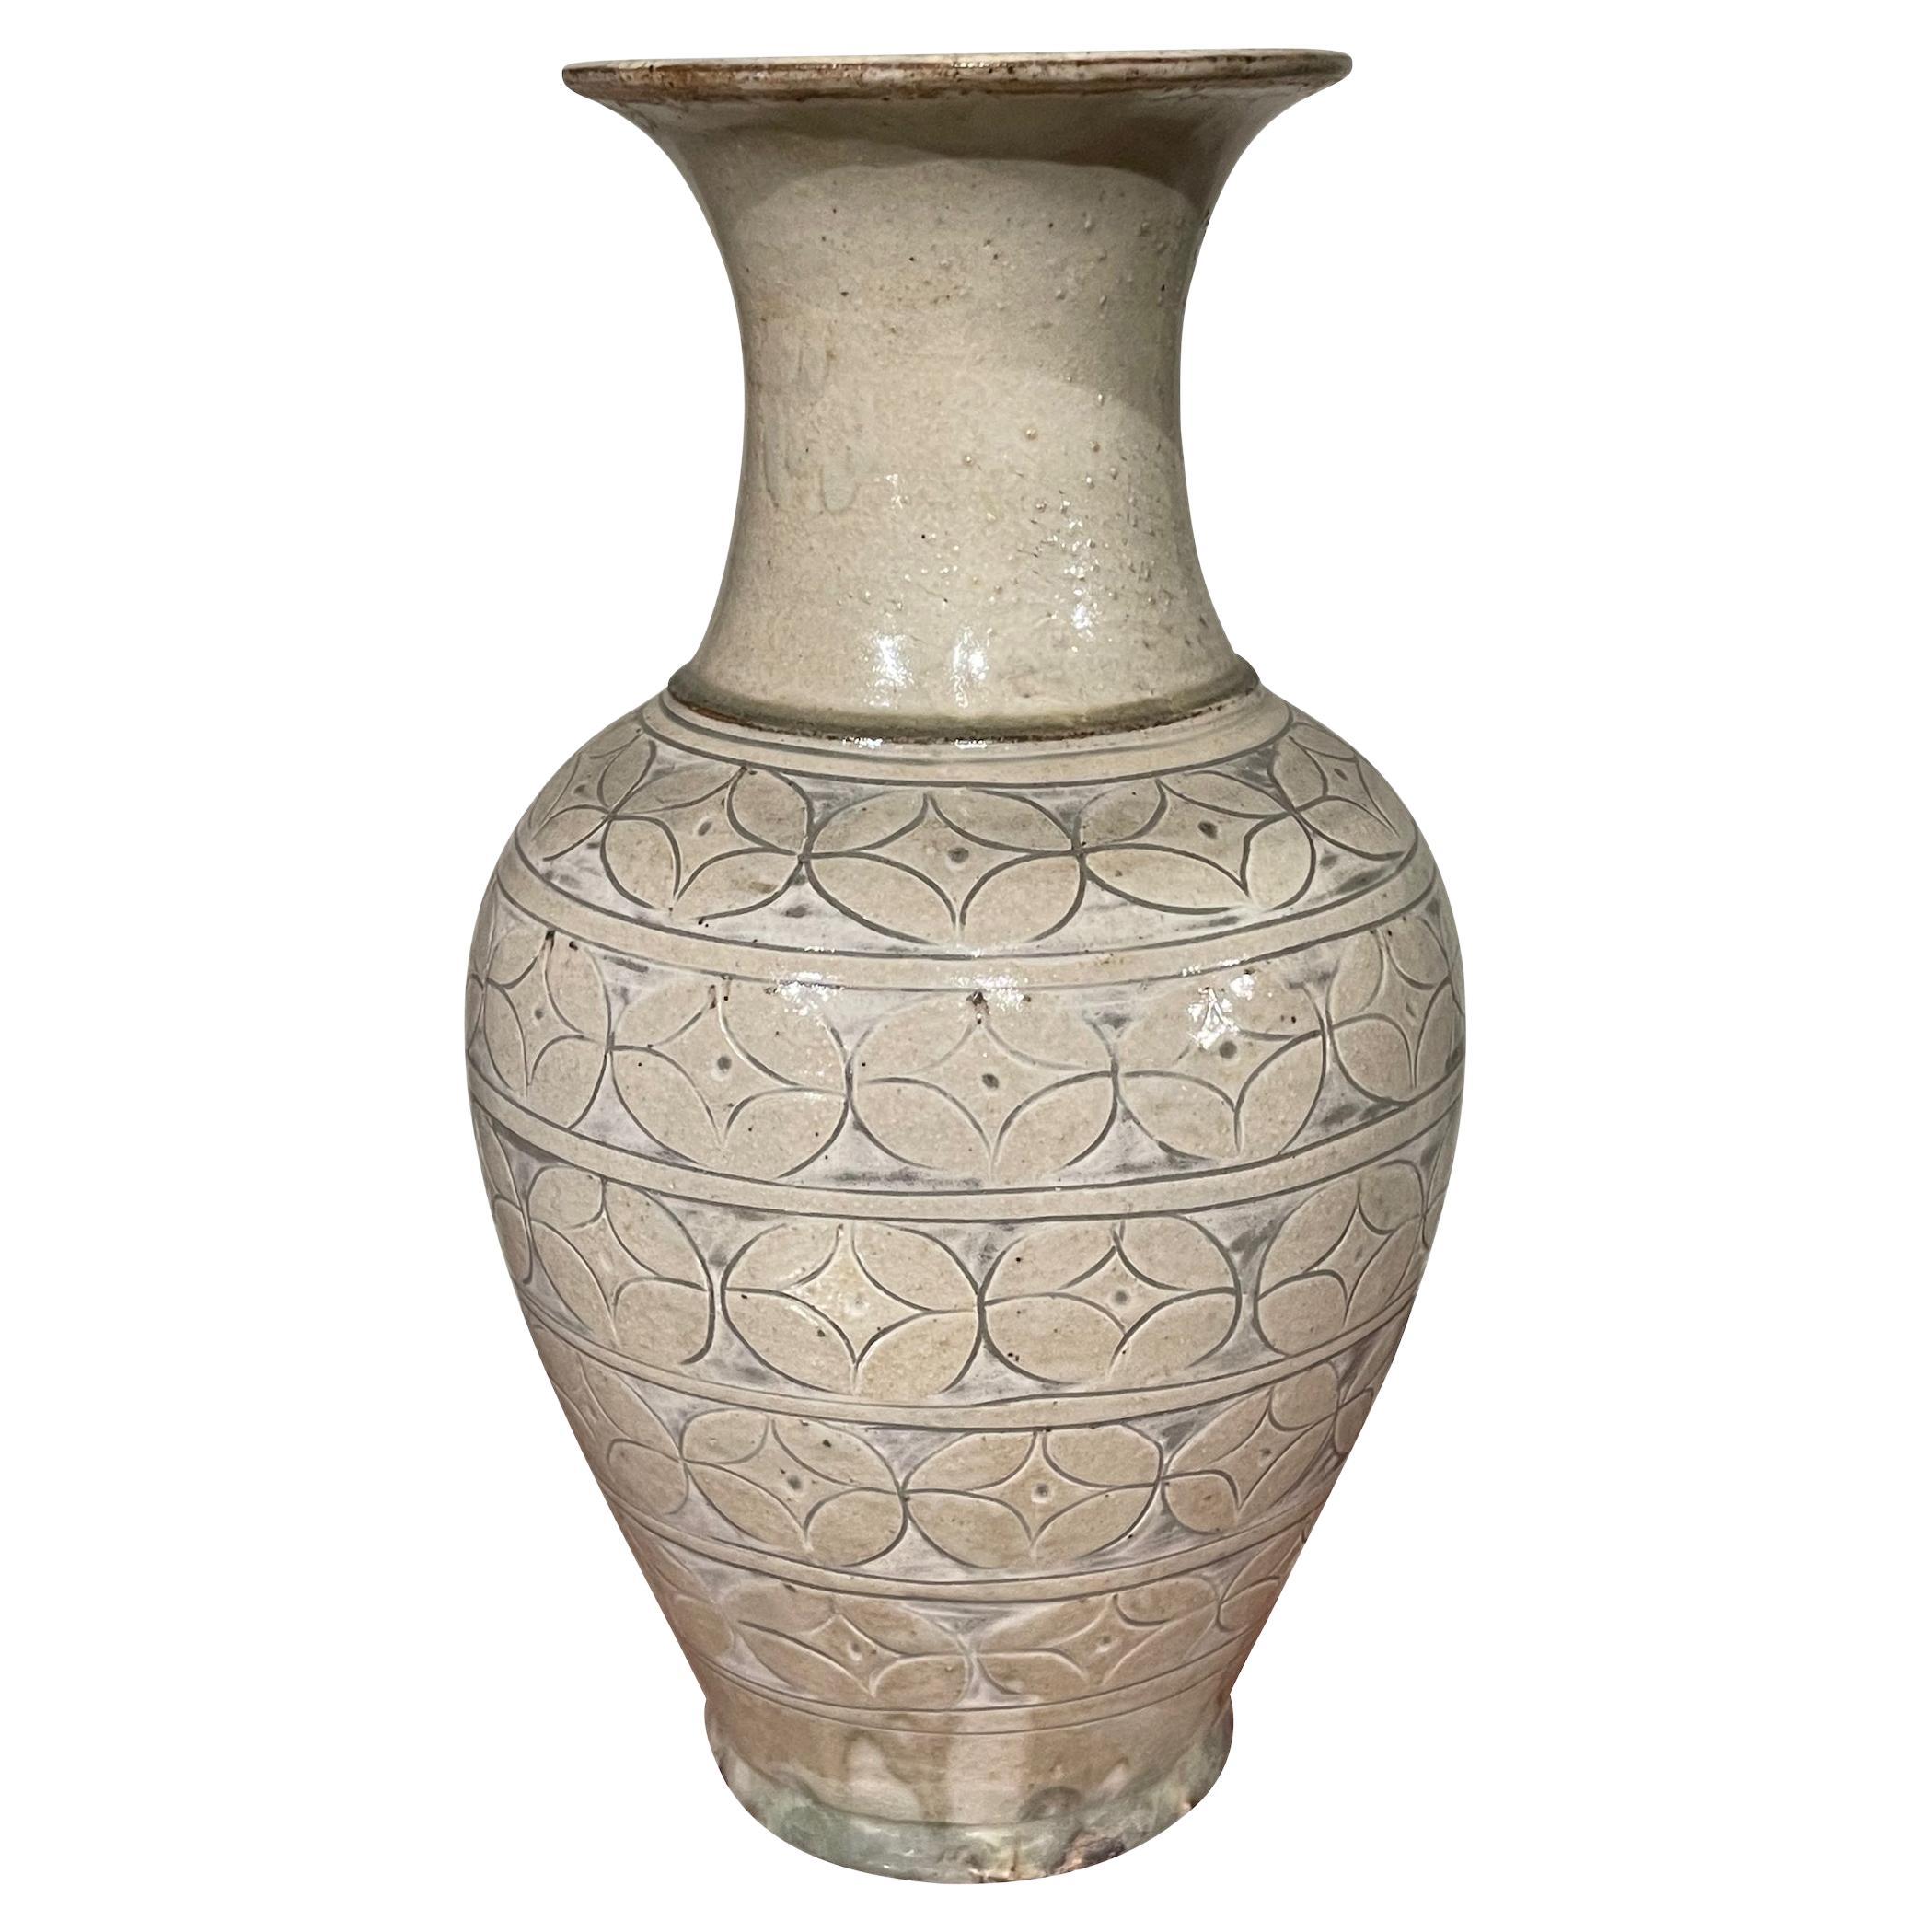 Cream Patterned Classic Shape Ceramic Vase, China, Contemporary